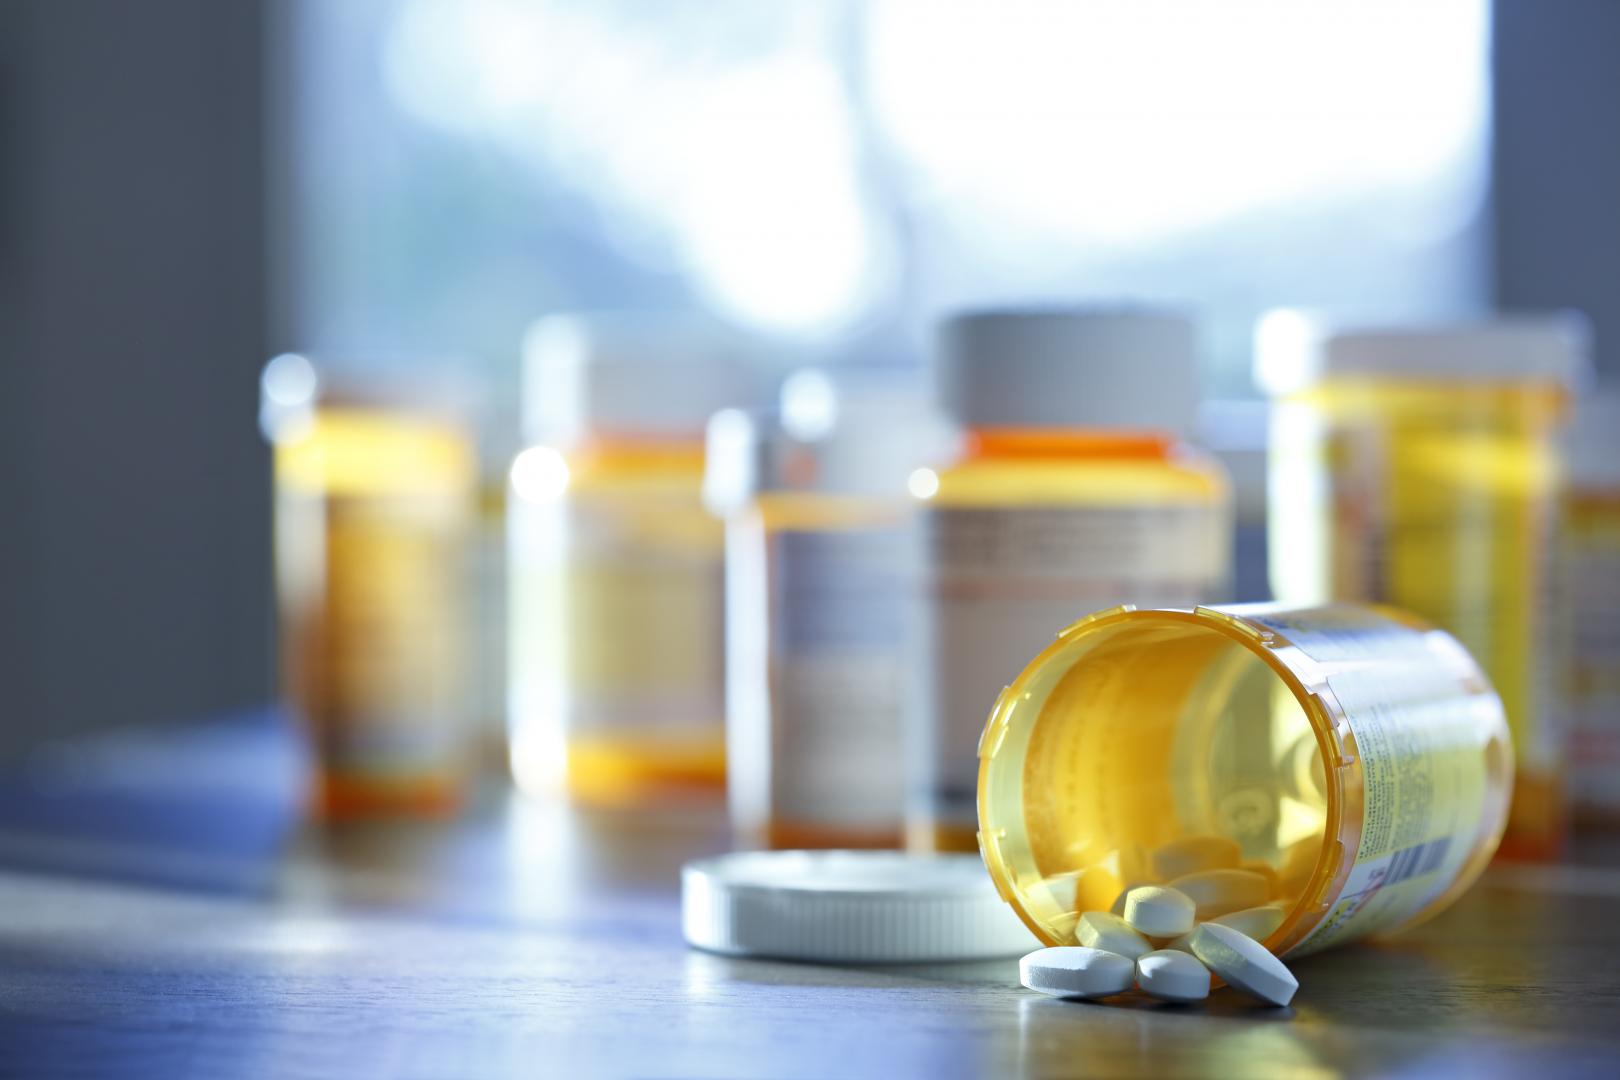 Tulsa Health Department Encourages Prescription Drug Safety During Holidays